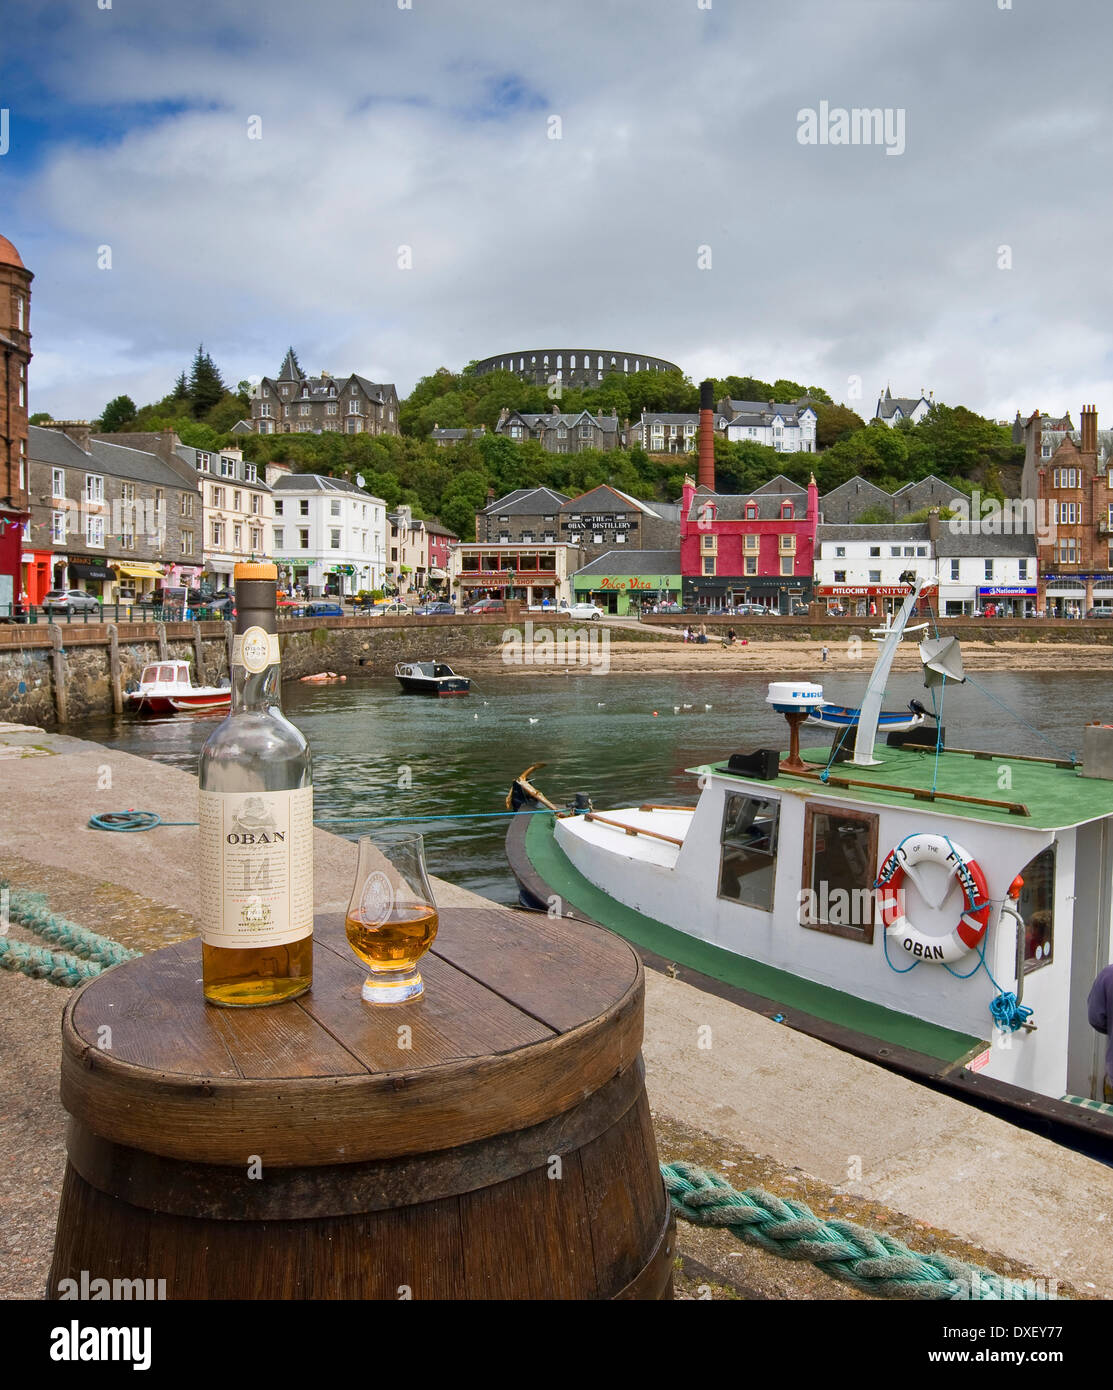 Botella de whisky Oban como se ve desde el Muelle Norte, Oban, Argyll Foto de stock